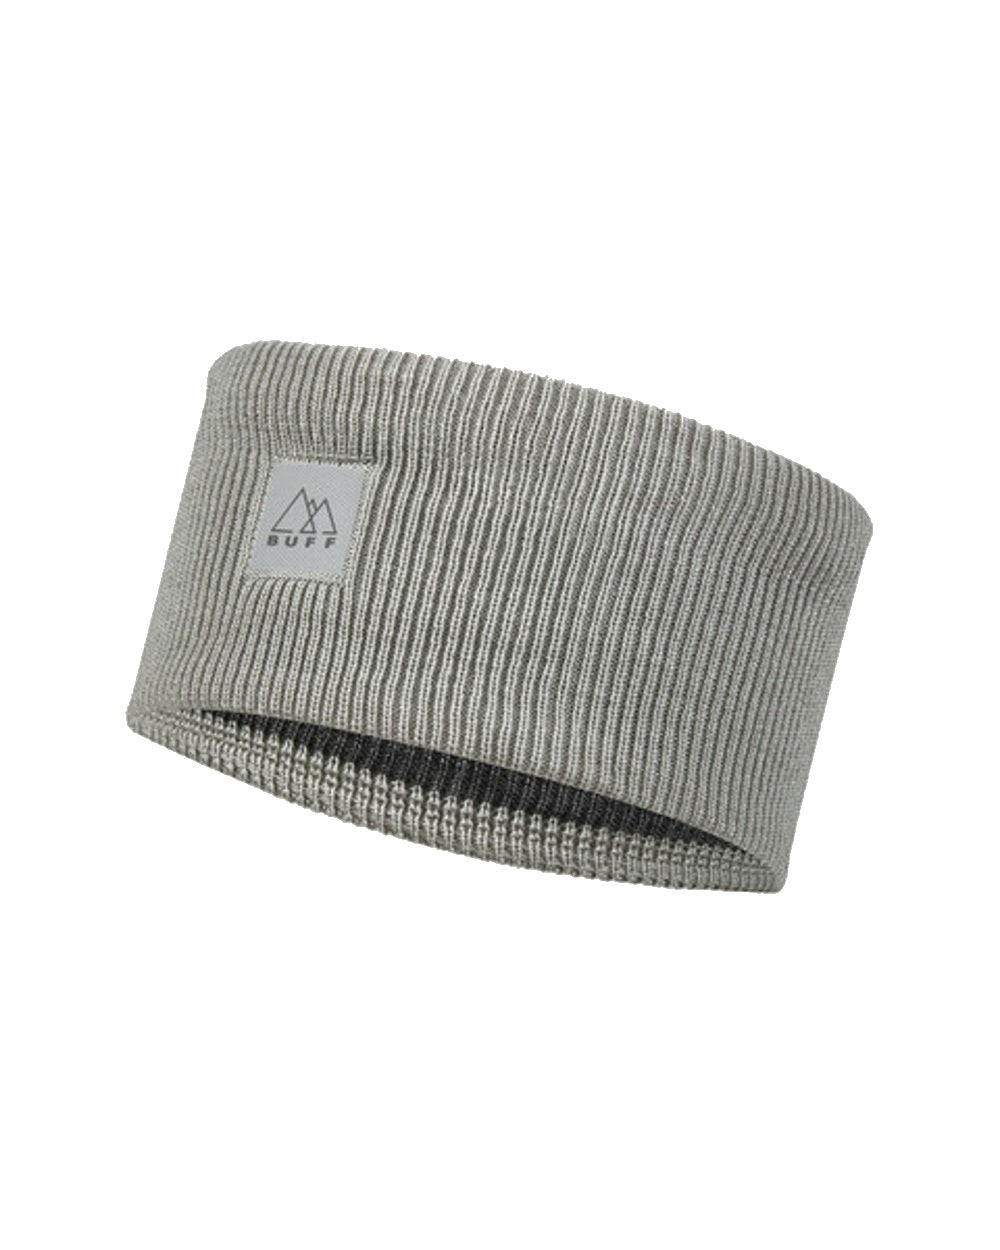 Buff CrossKnit Headband in Light Grey 